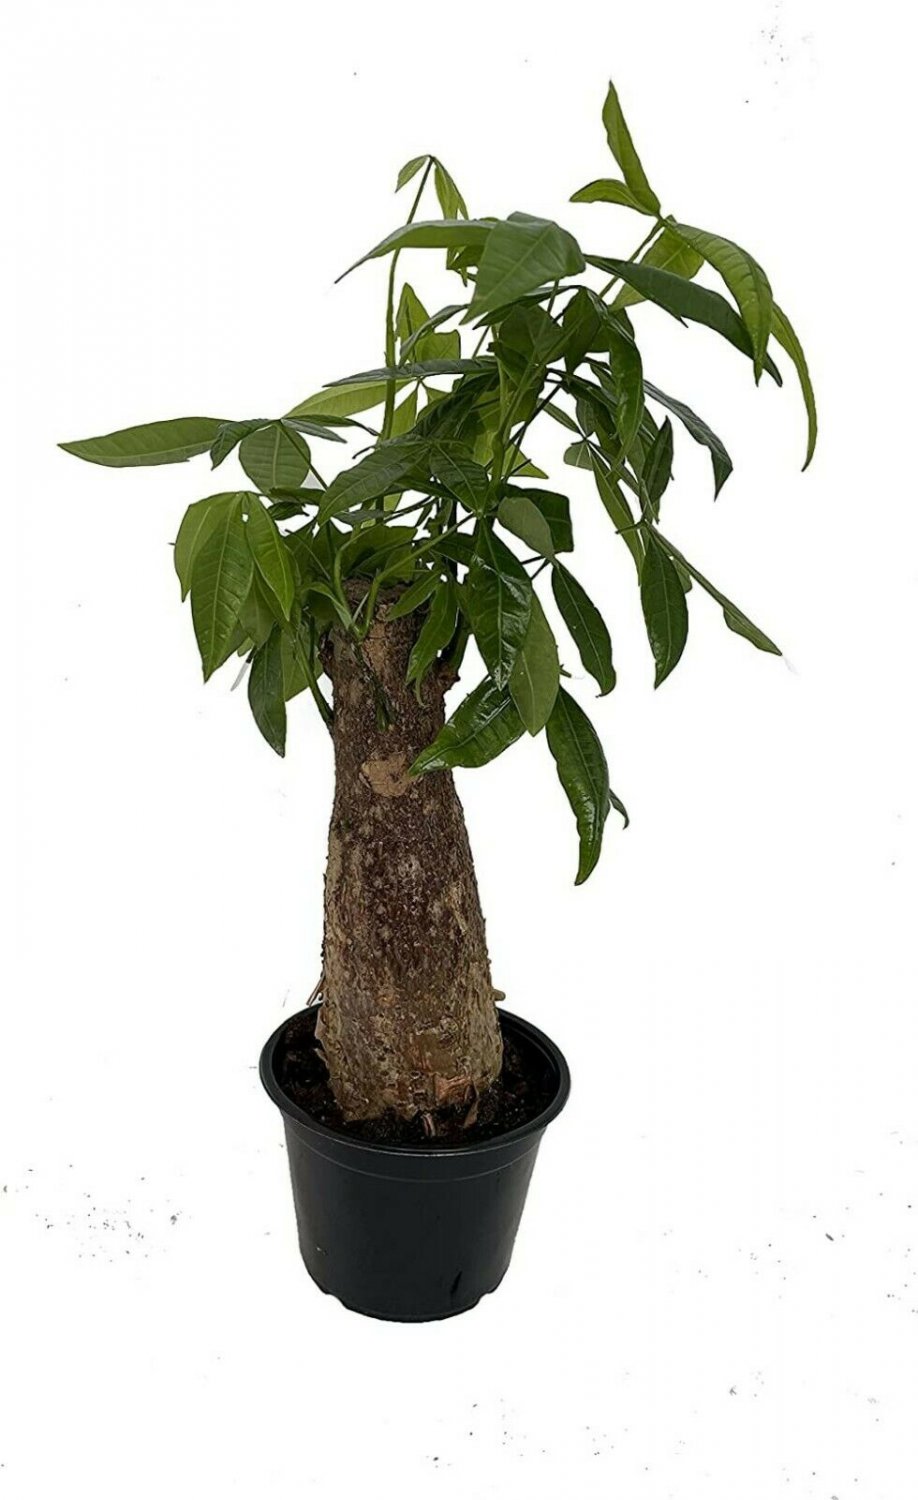 Aquatica Money Stumps Thicks Tree Pachira Easy To Grow Indoors Live Plant 6" Pot